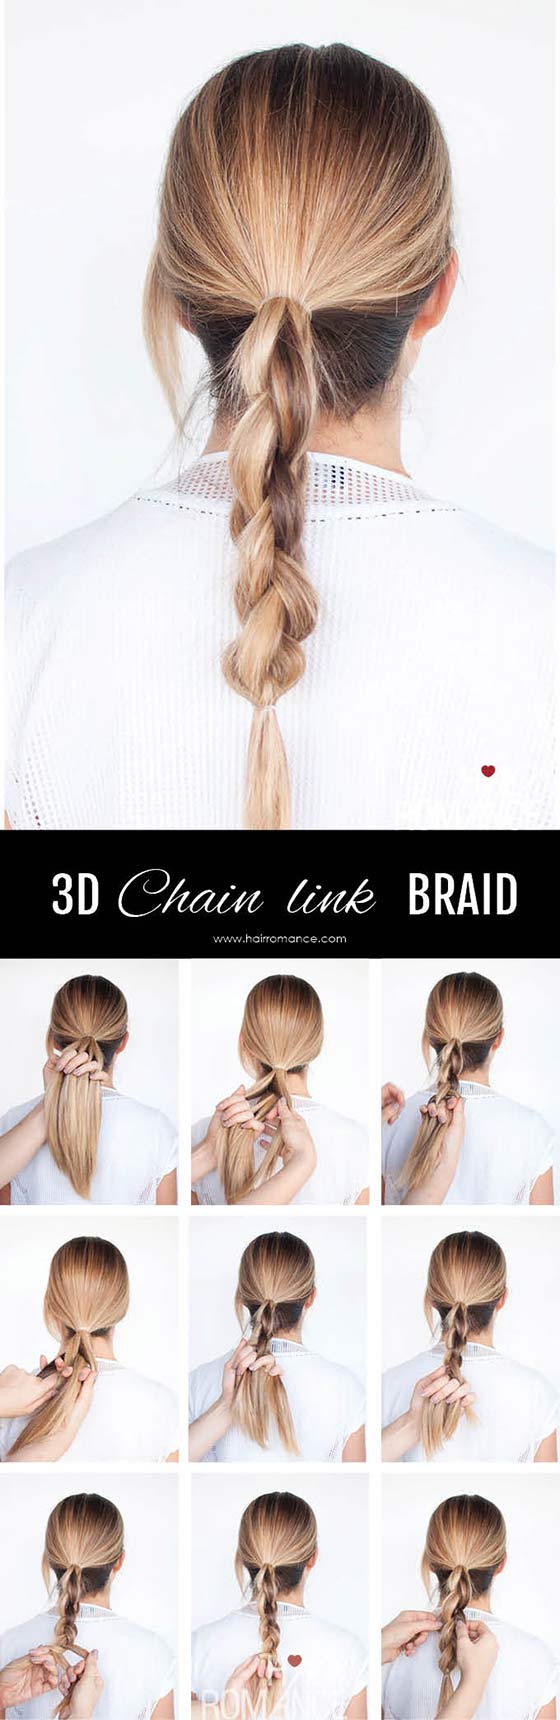 40 Easy Braided Hairstyles That We Love - Gravetics